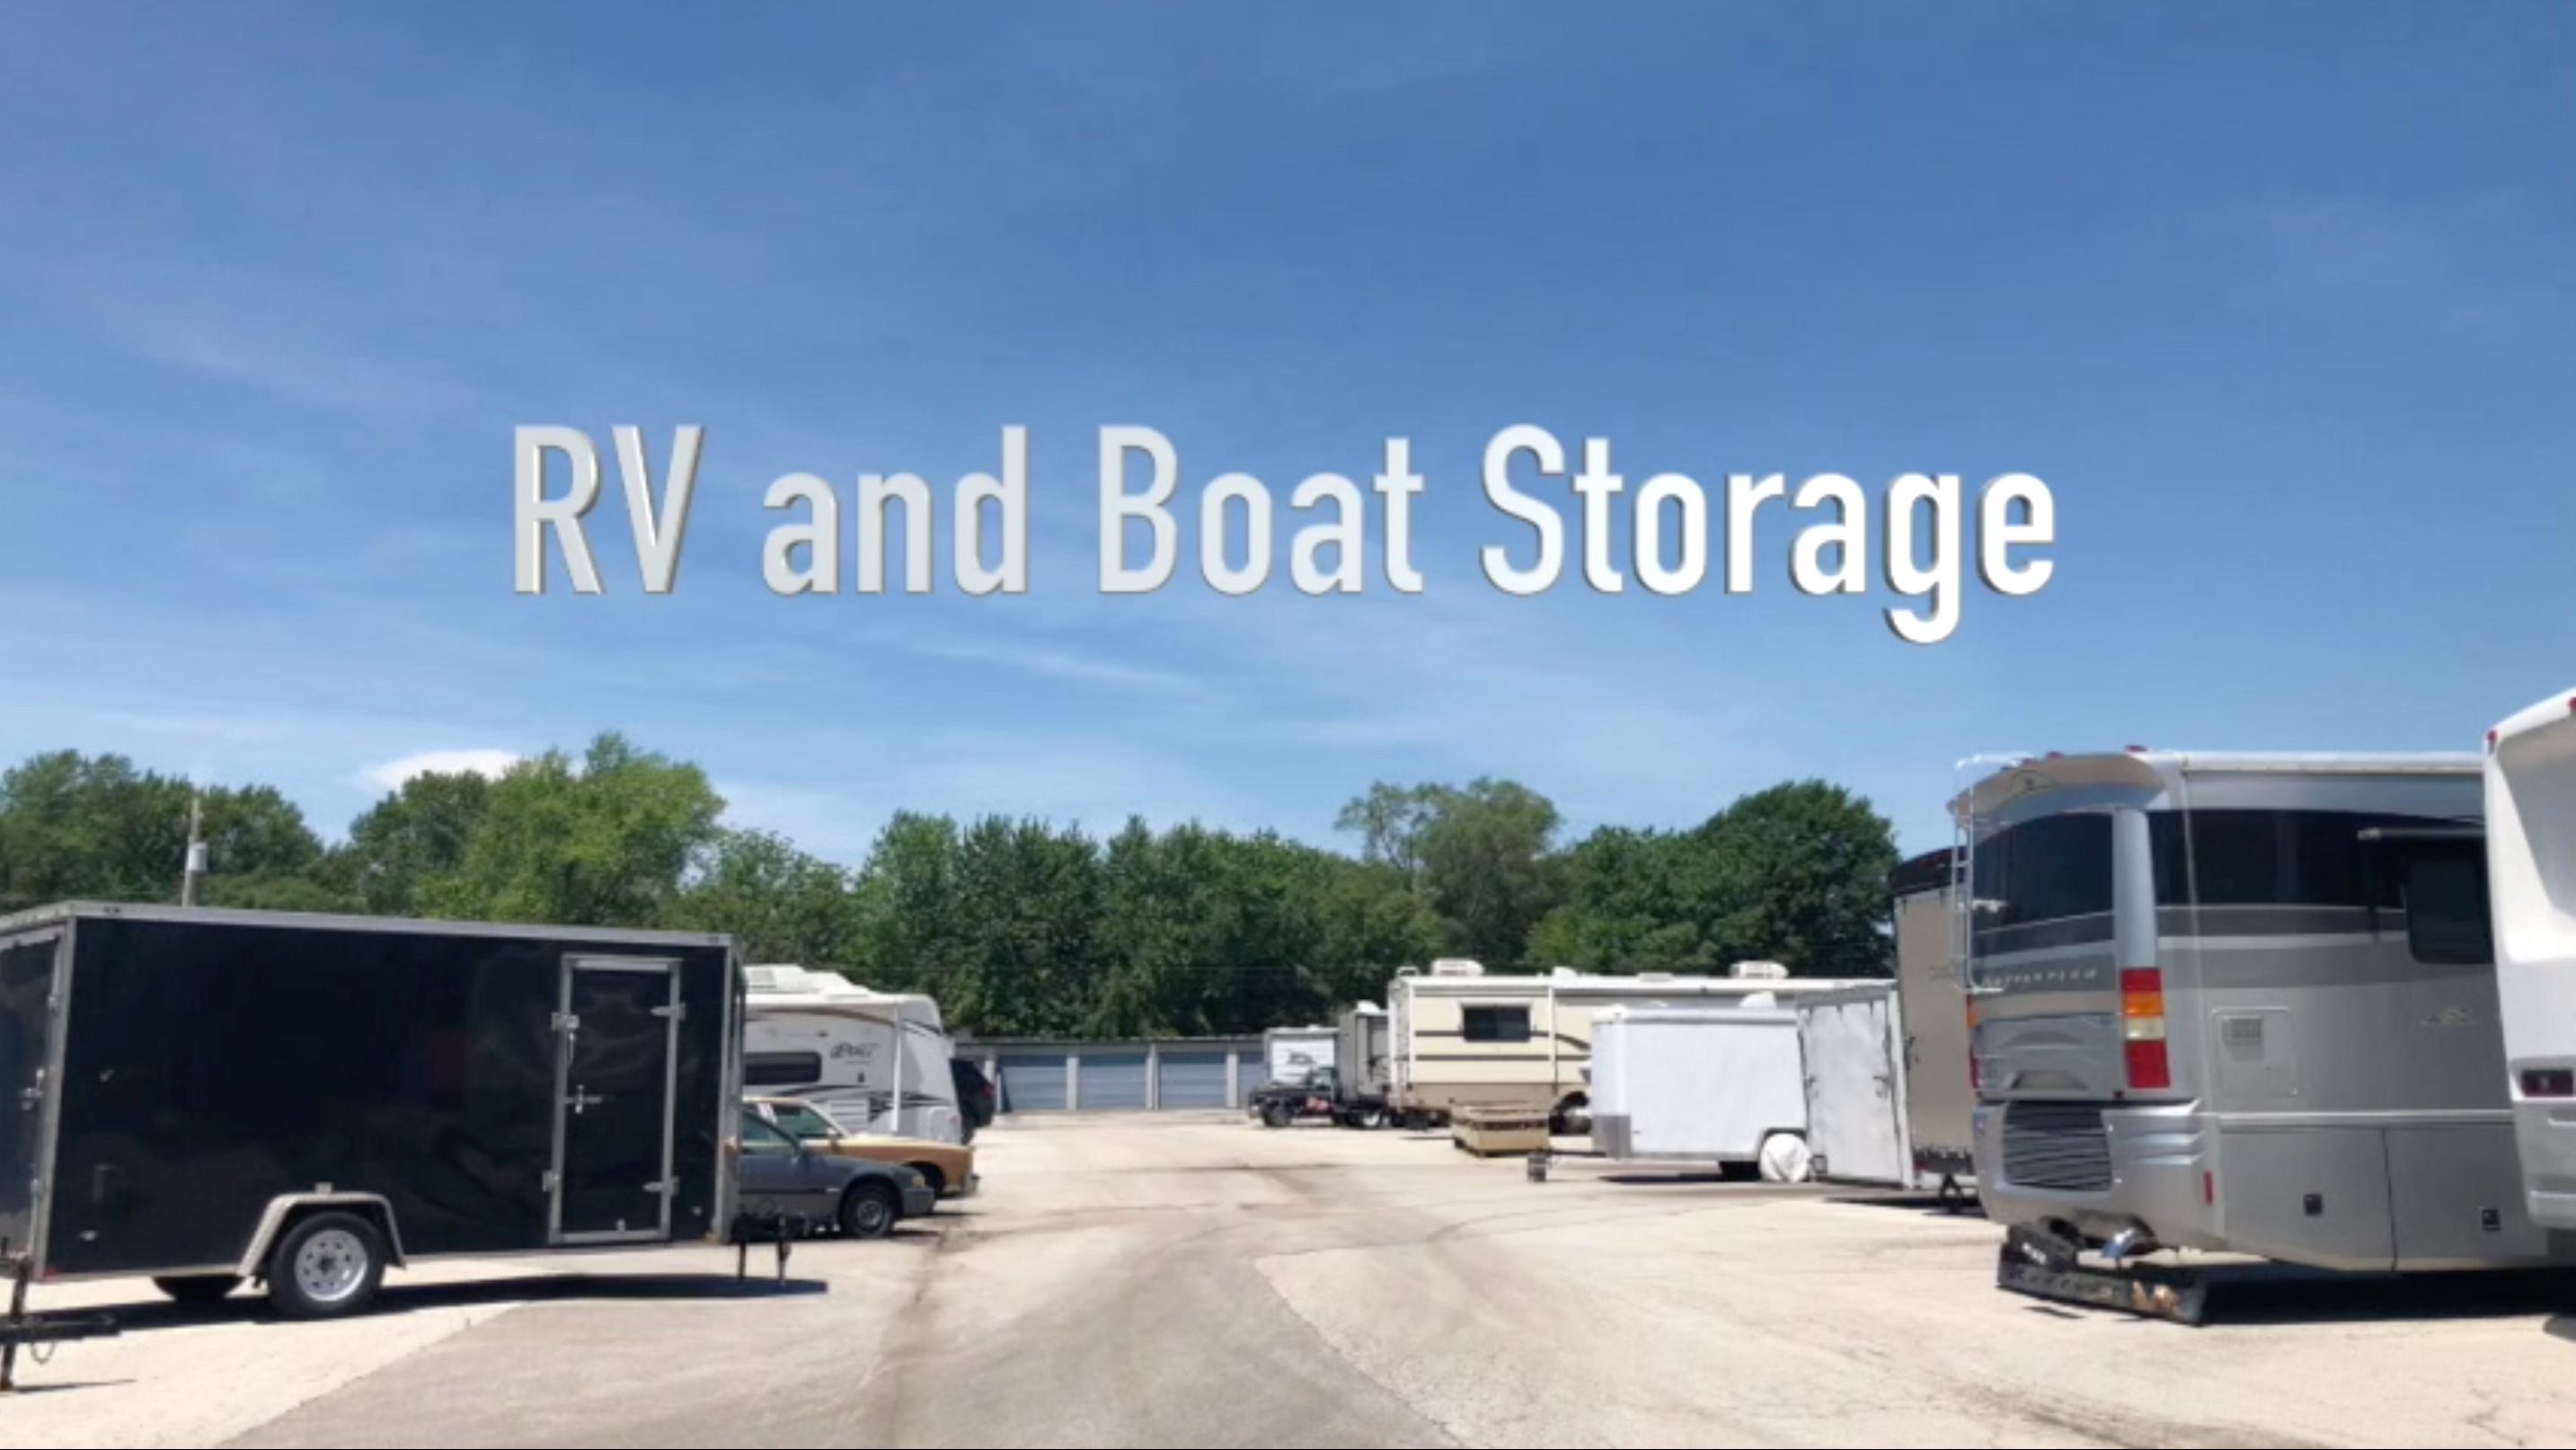 RV and boat storage Lee's Summit, MO